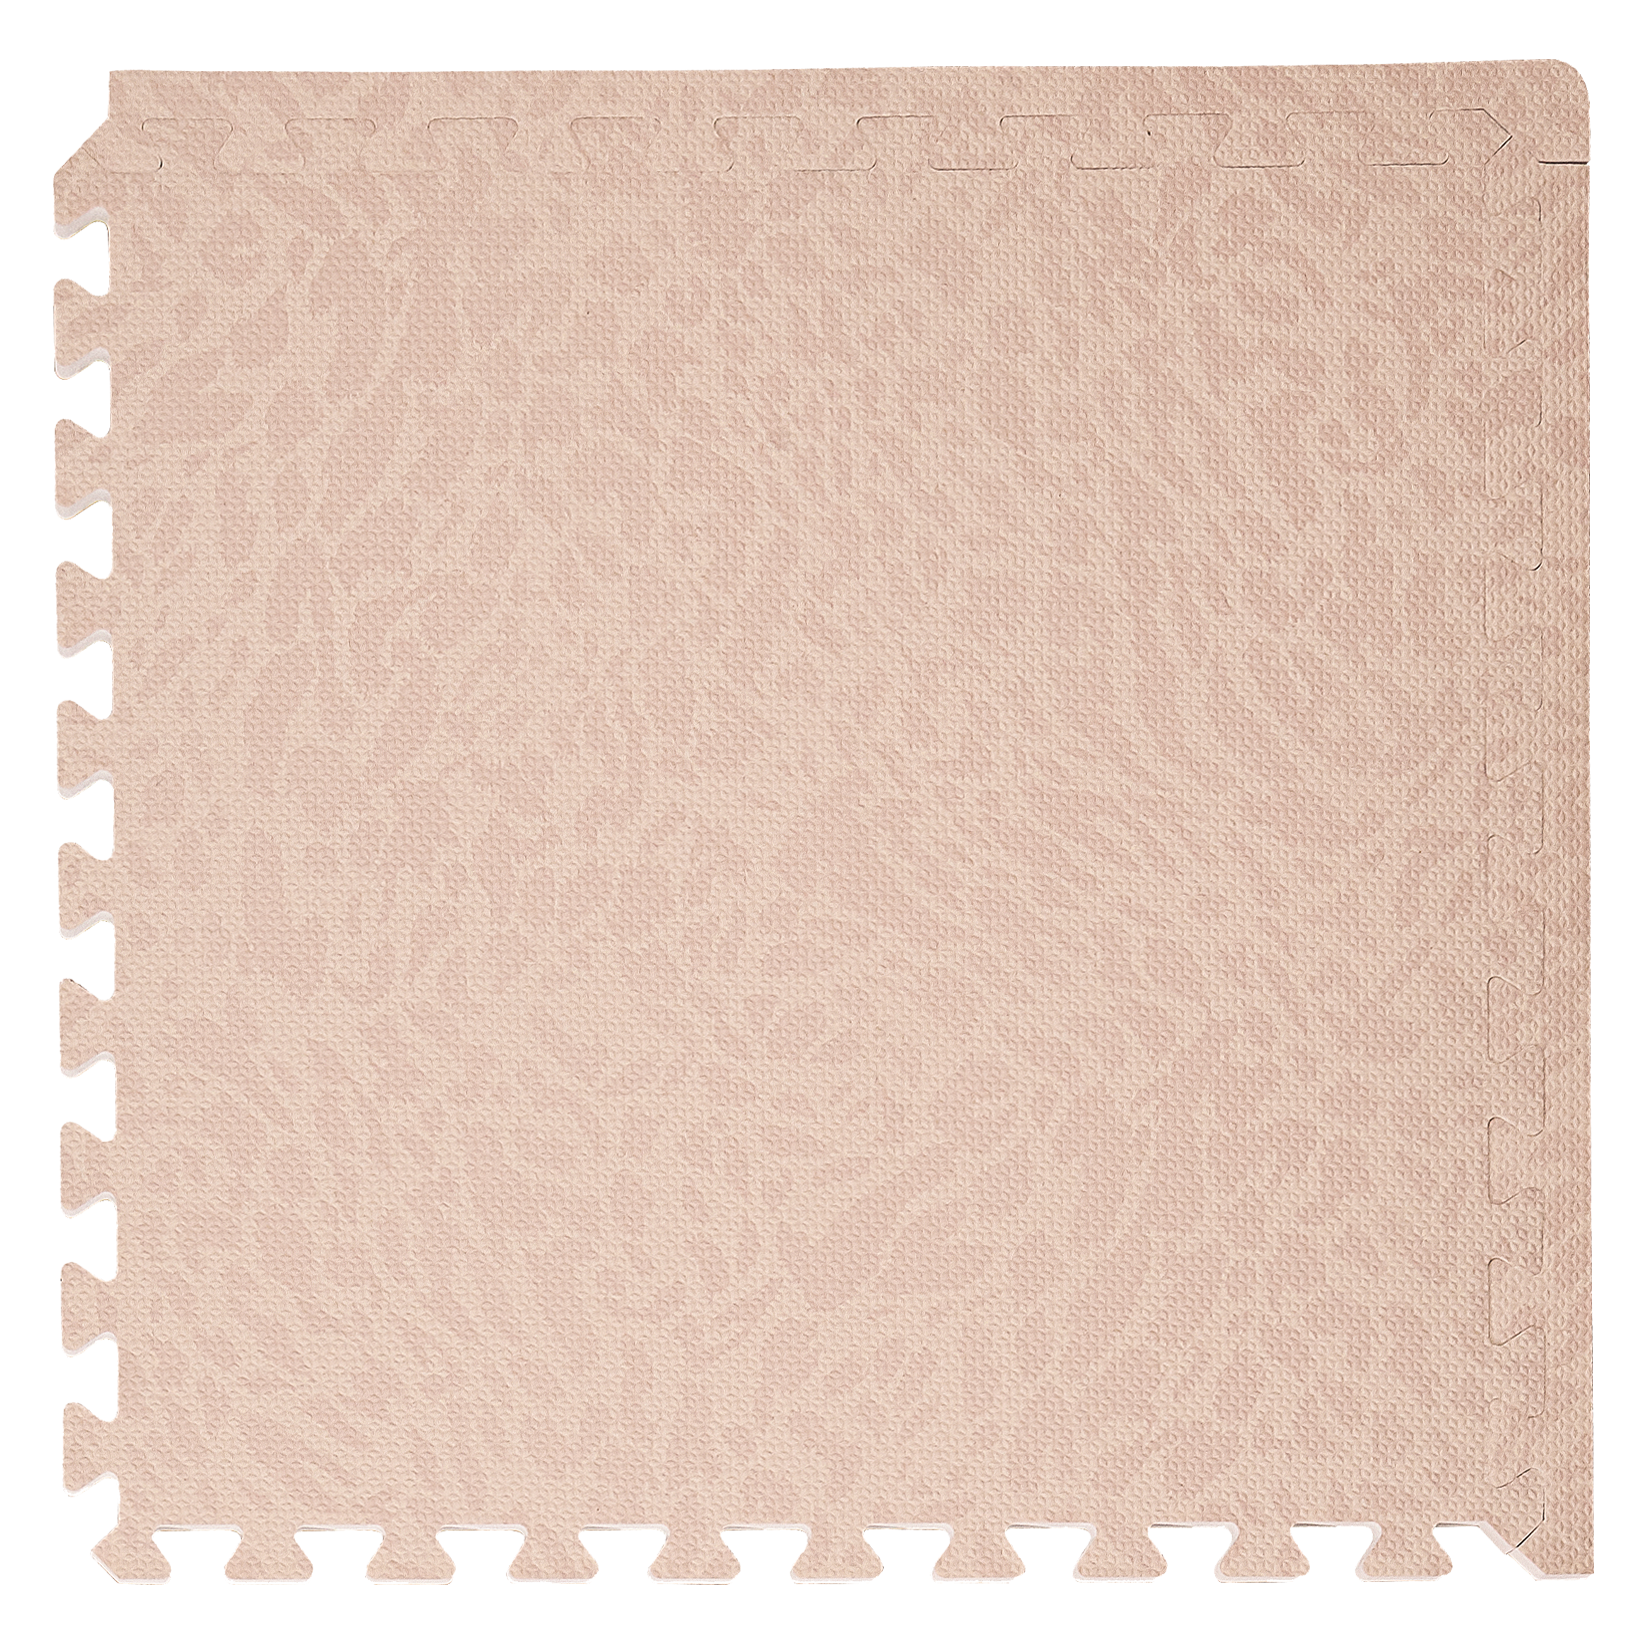 Tapis puzzle motif terre couleur marine Toddlekind